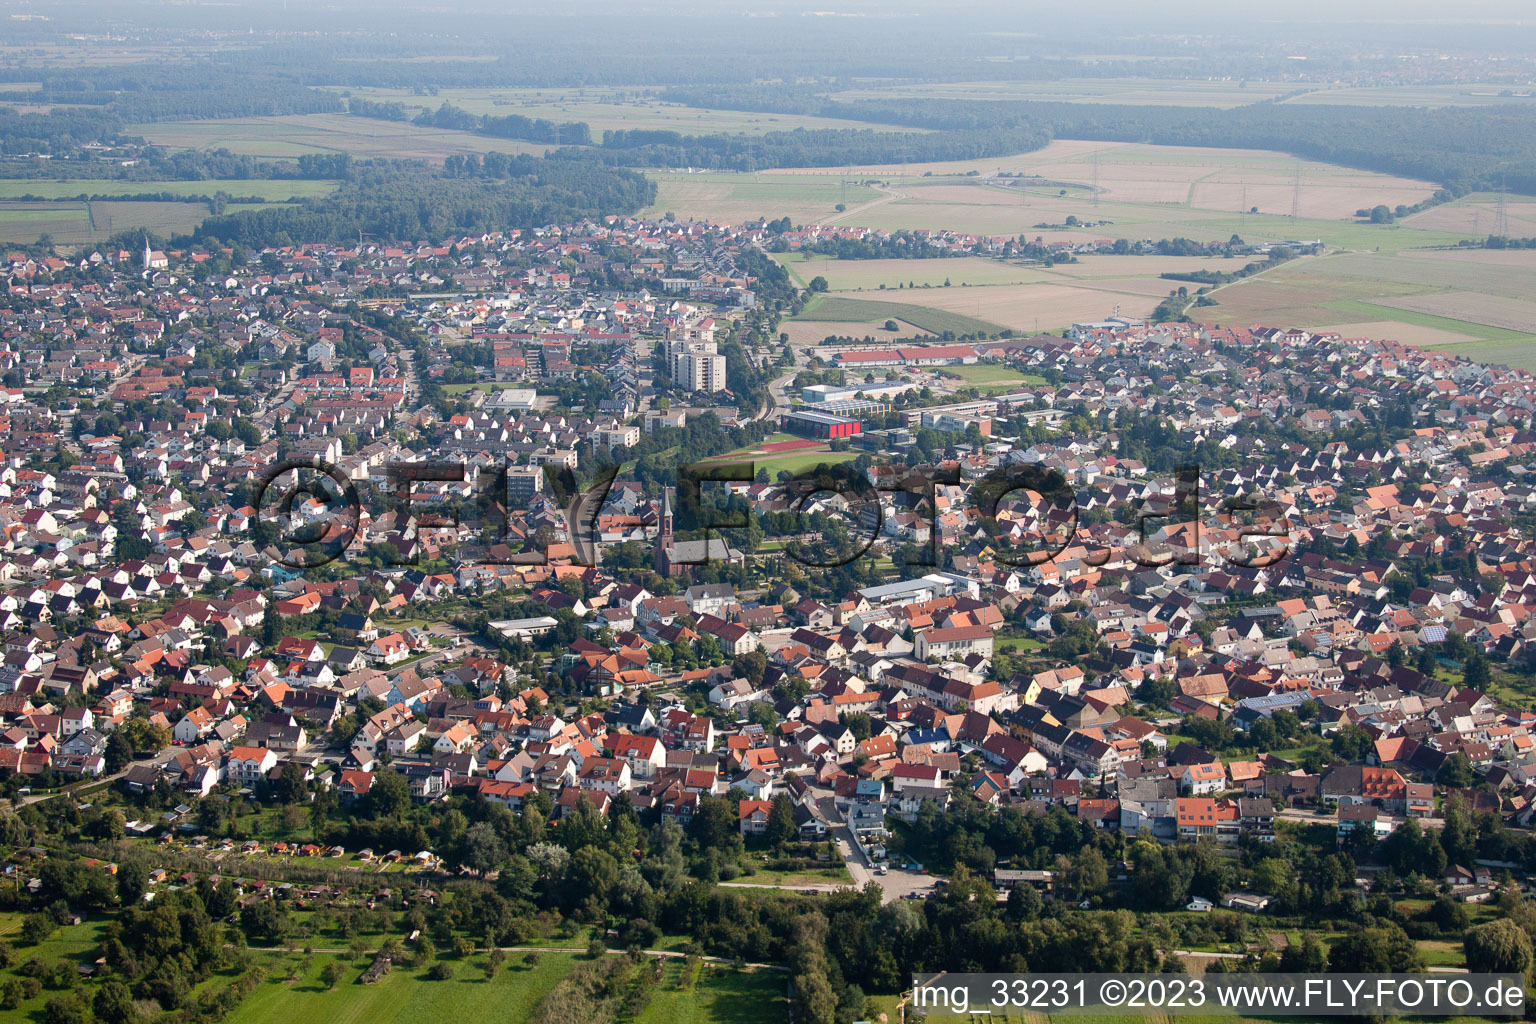 District Linkenheim in Linkenheim-Hochstetten in the state Baden-Wuerttemberg, Germany from the plane